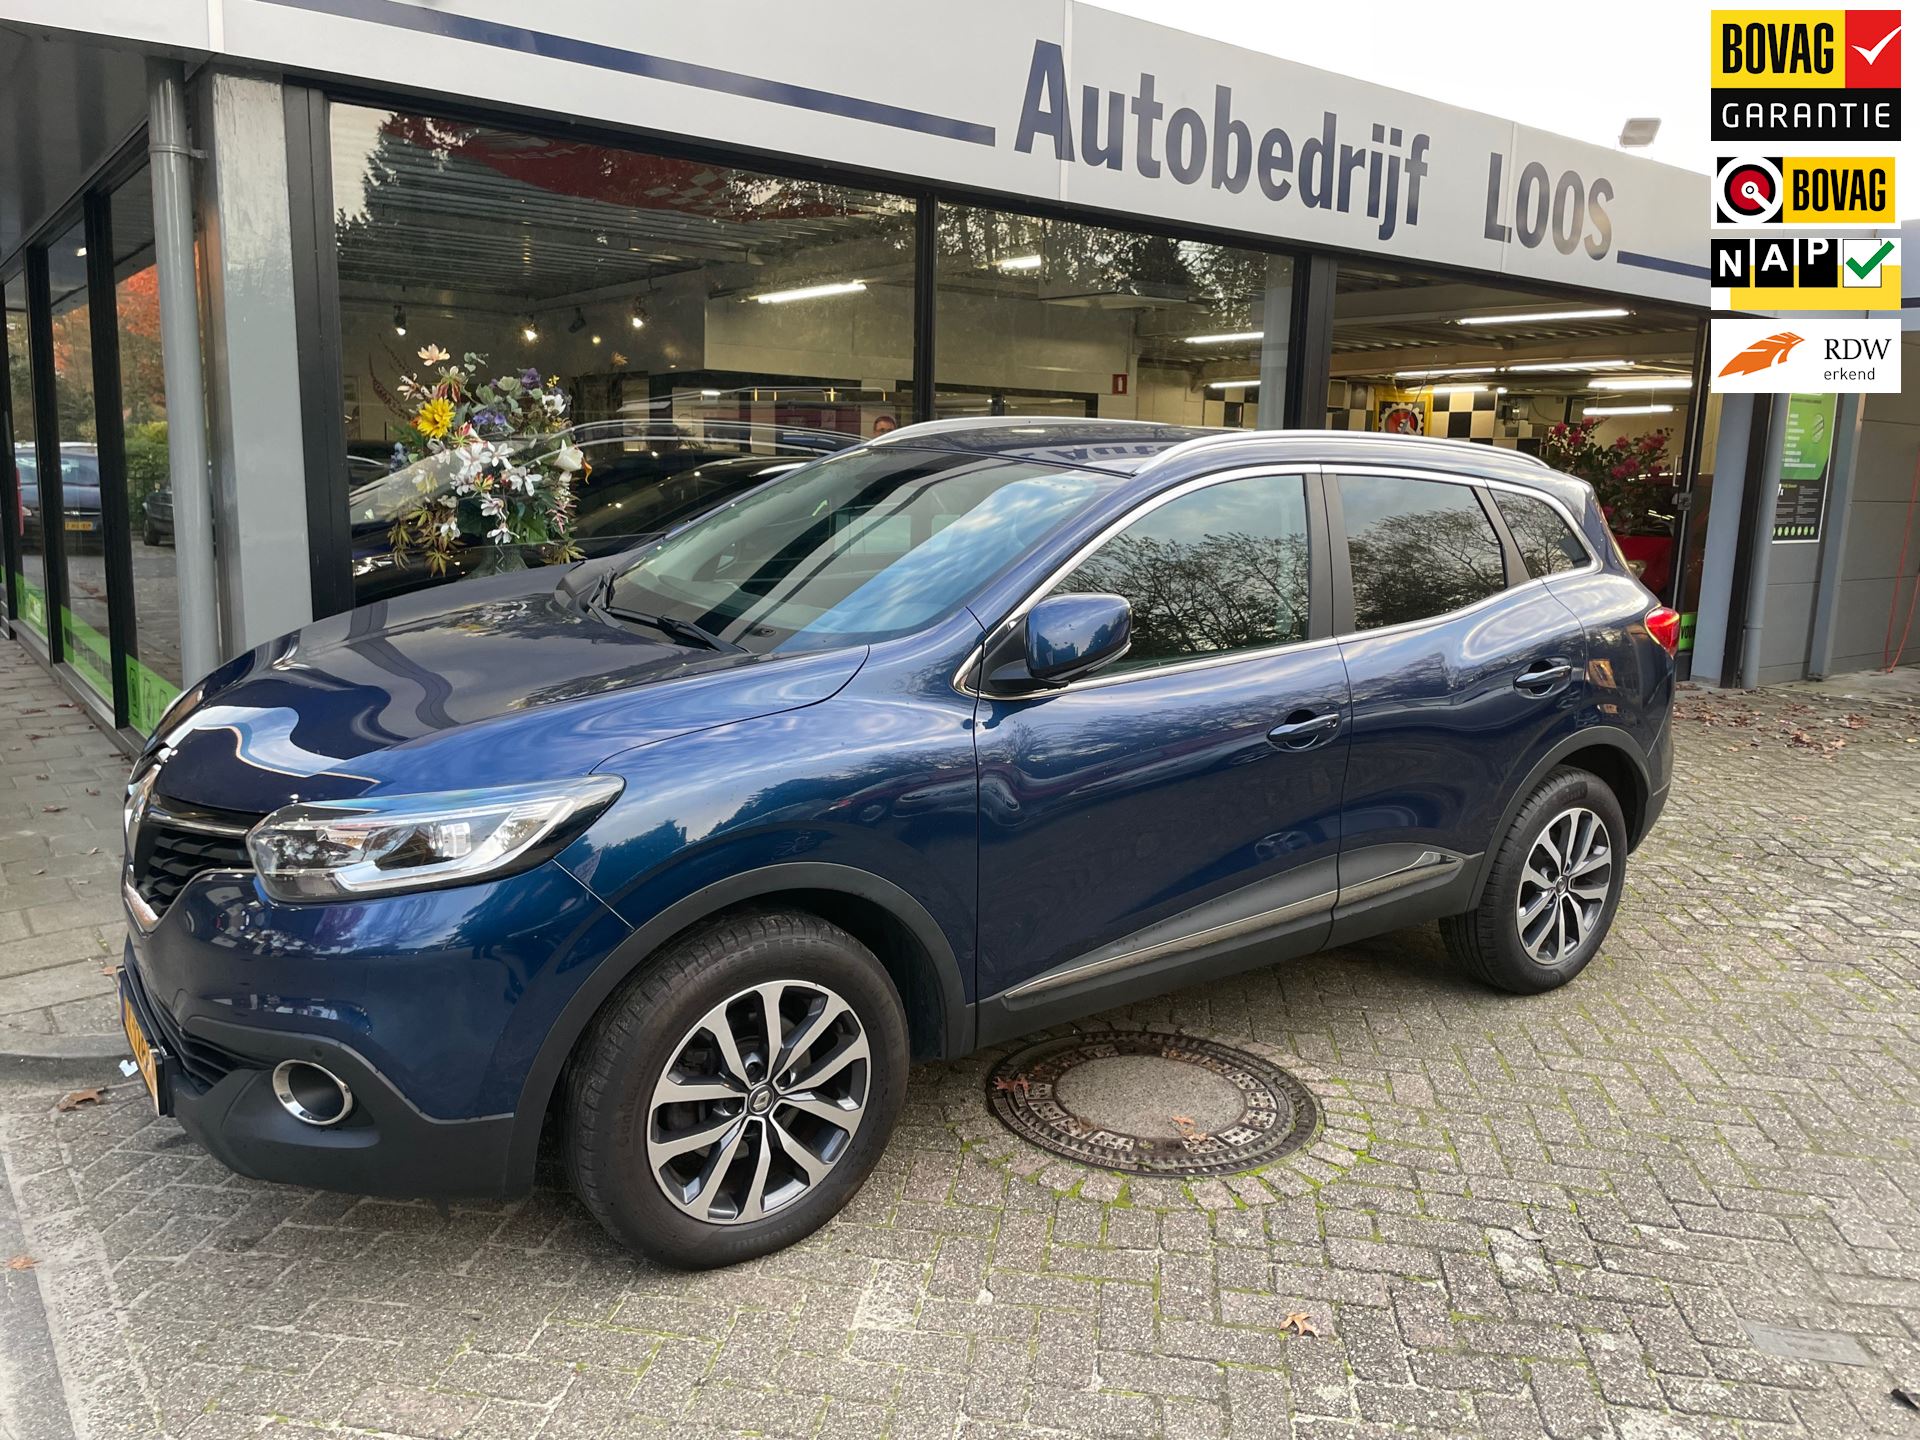 Renault Kadjar occasion - Bovag Autobedrijf Loos